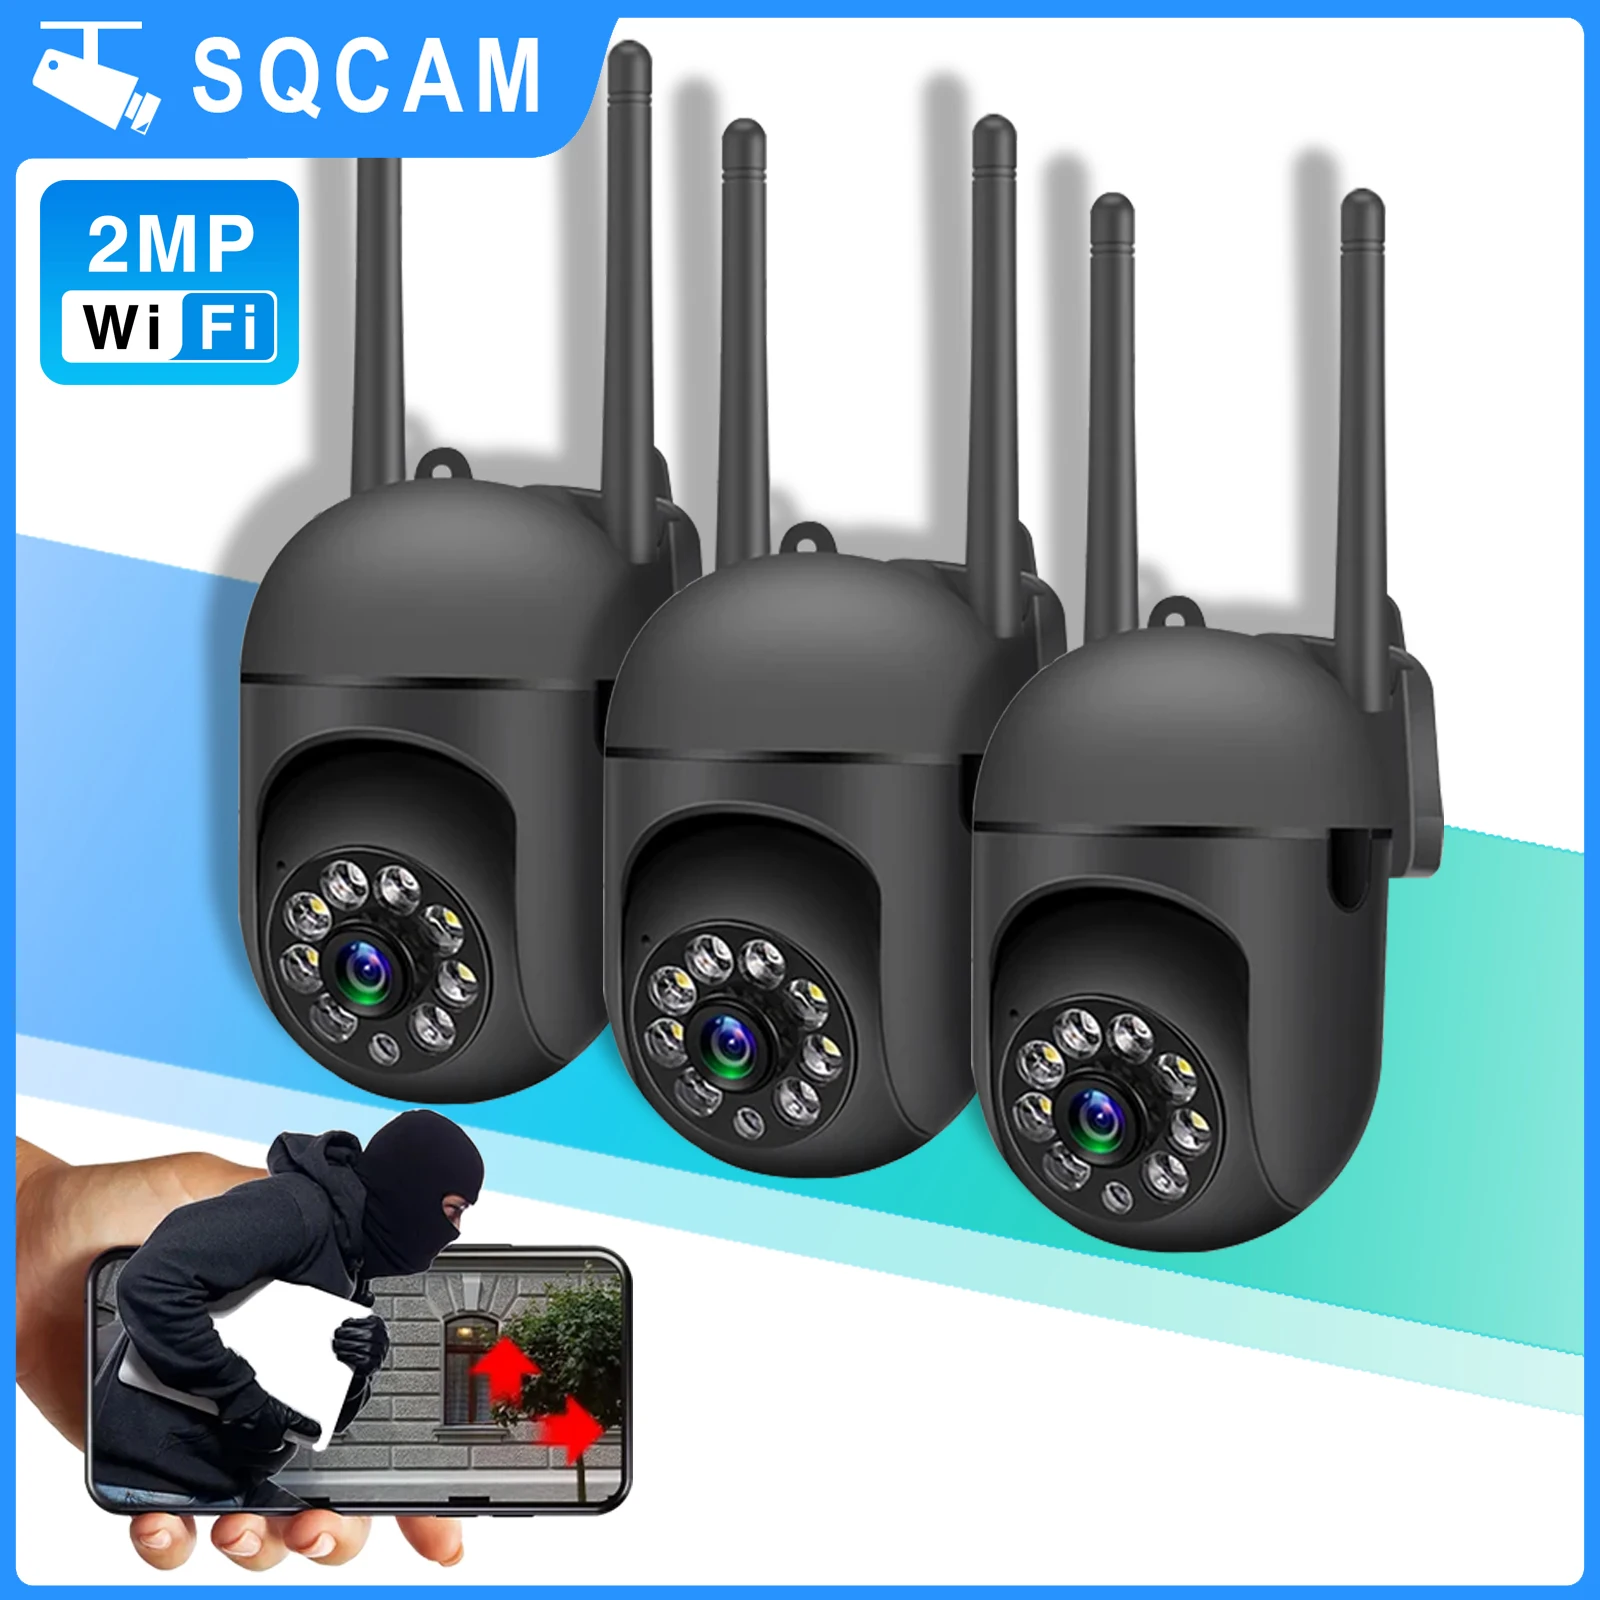 

SQCAM 1080P wifi camera wifi outdoor surveillance camera security protection PTZ self tracking waterproof app remote cameras